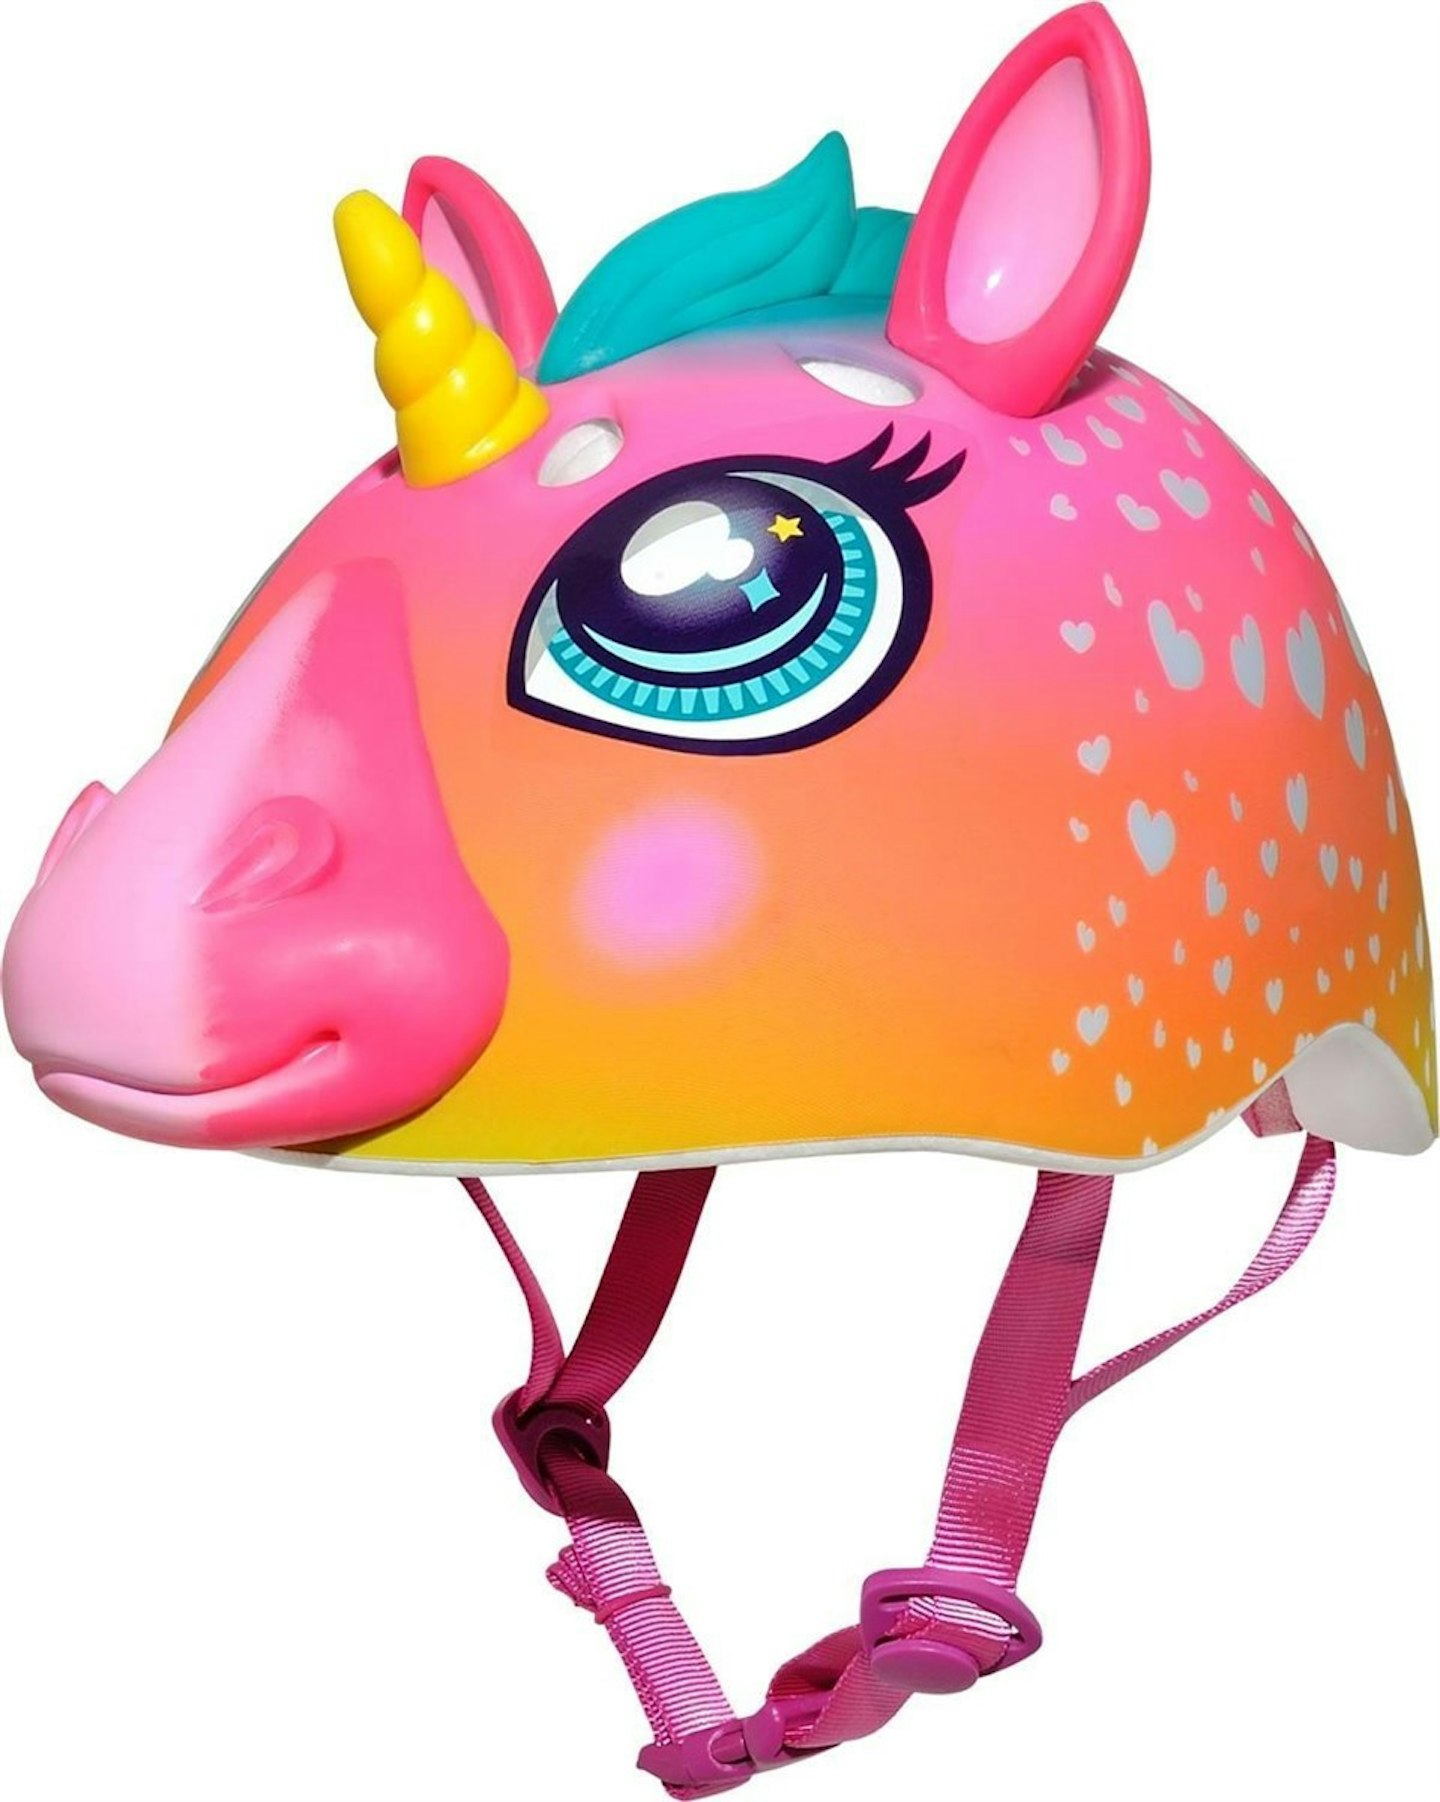 C-Preme Raskullz Child Helmet unicorn